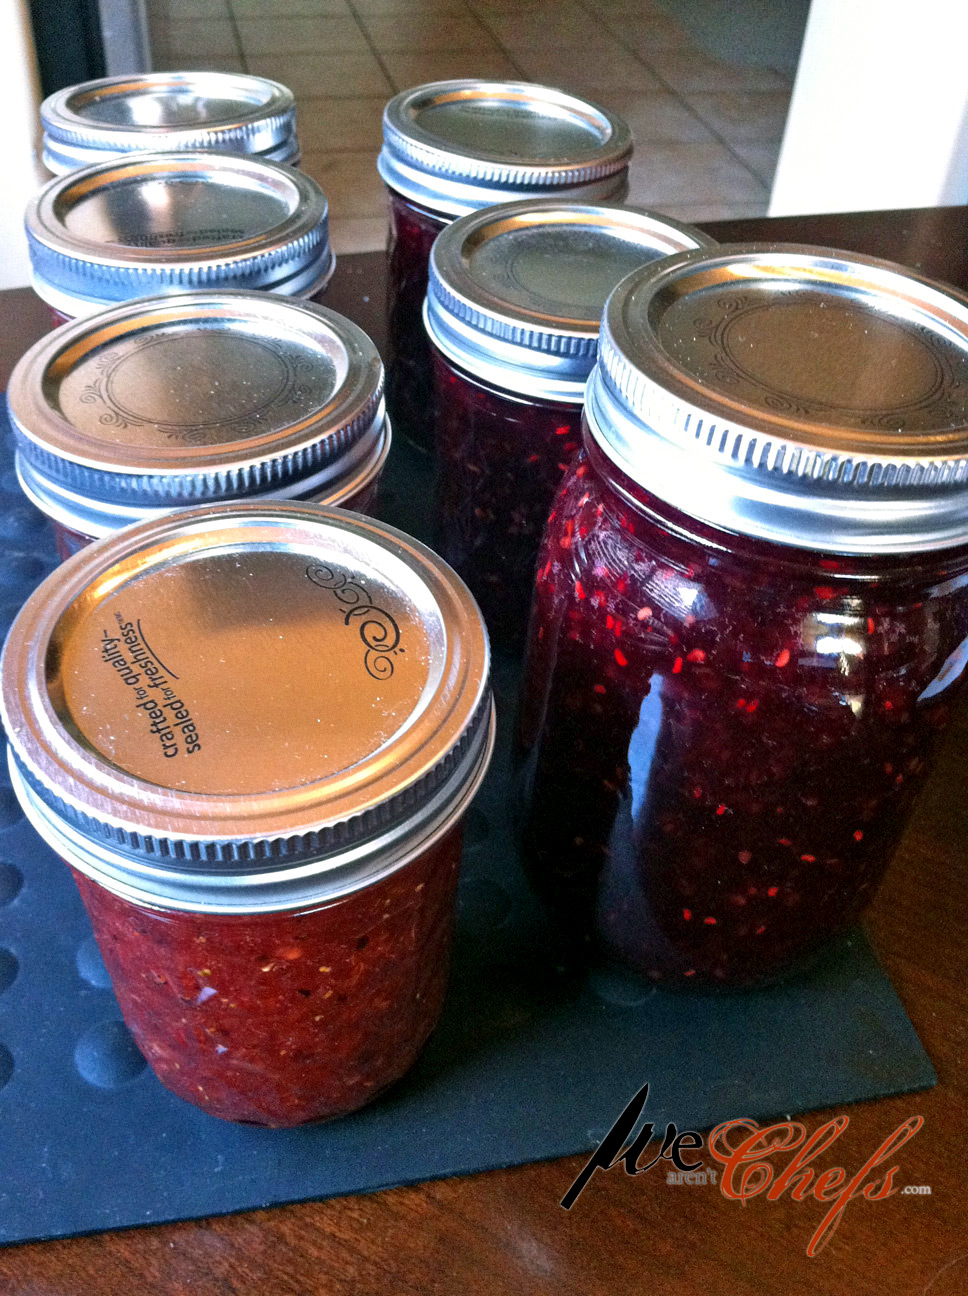 Small jars of jam